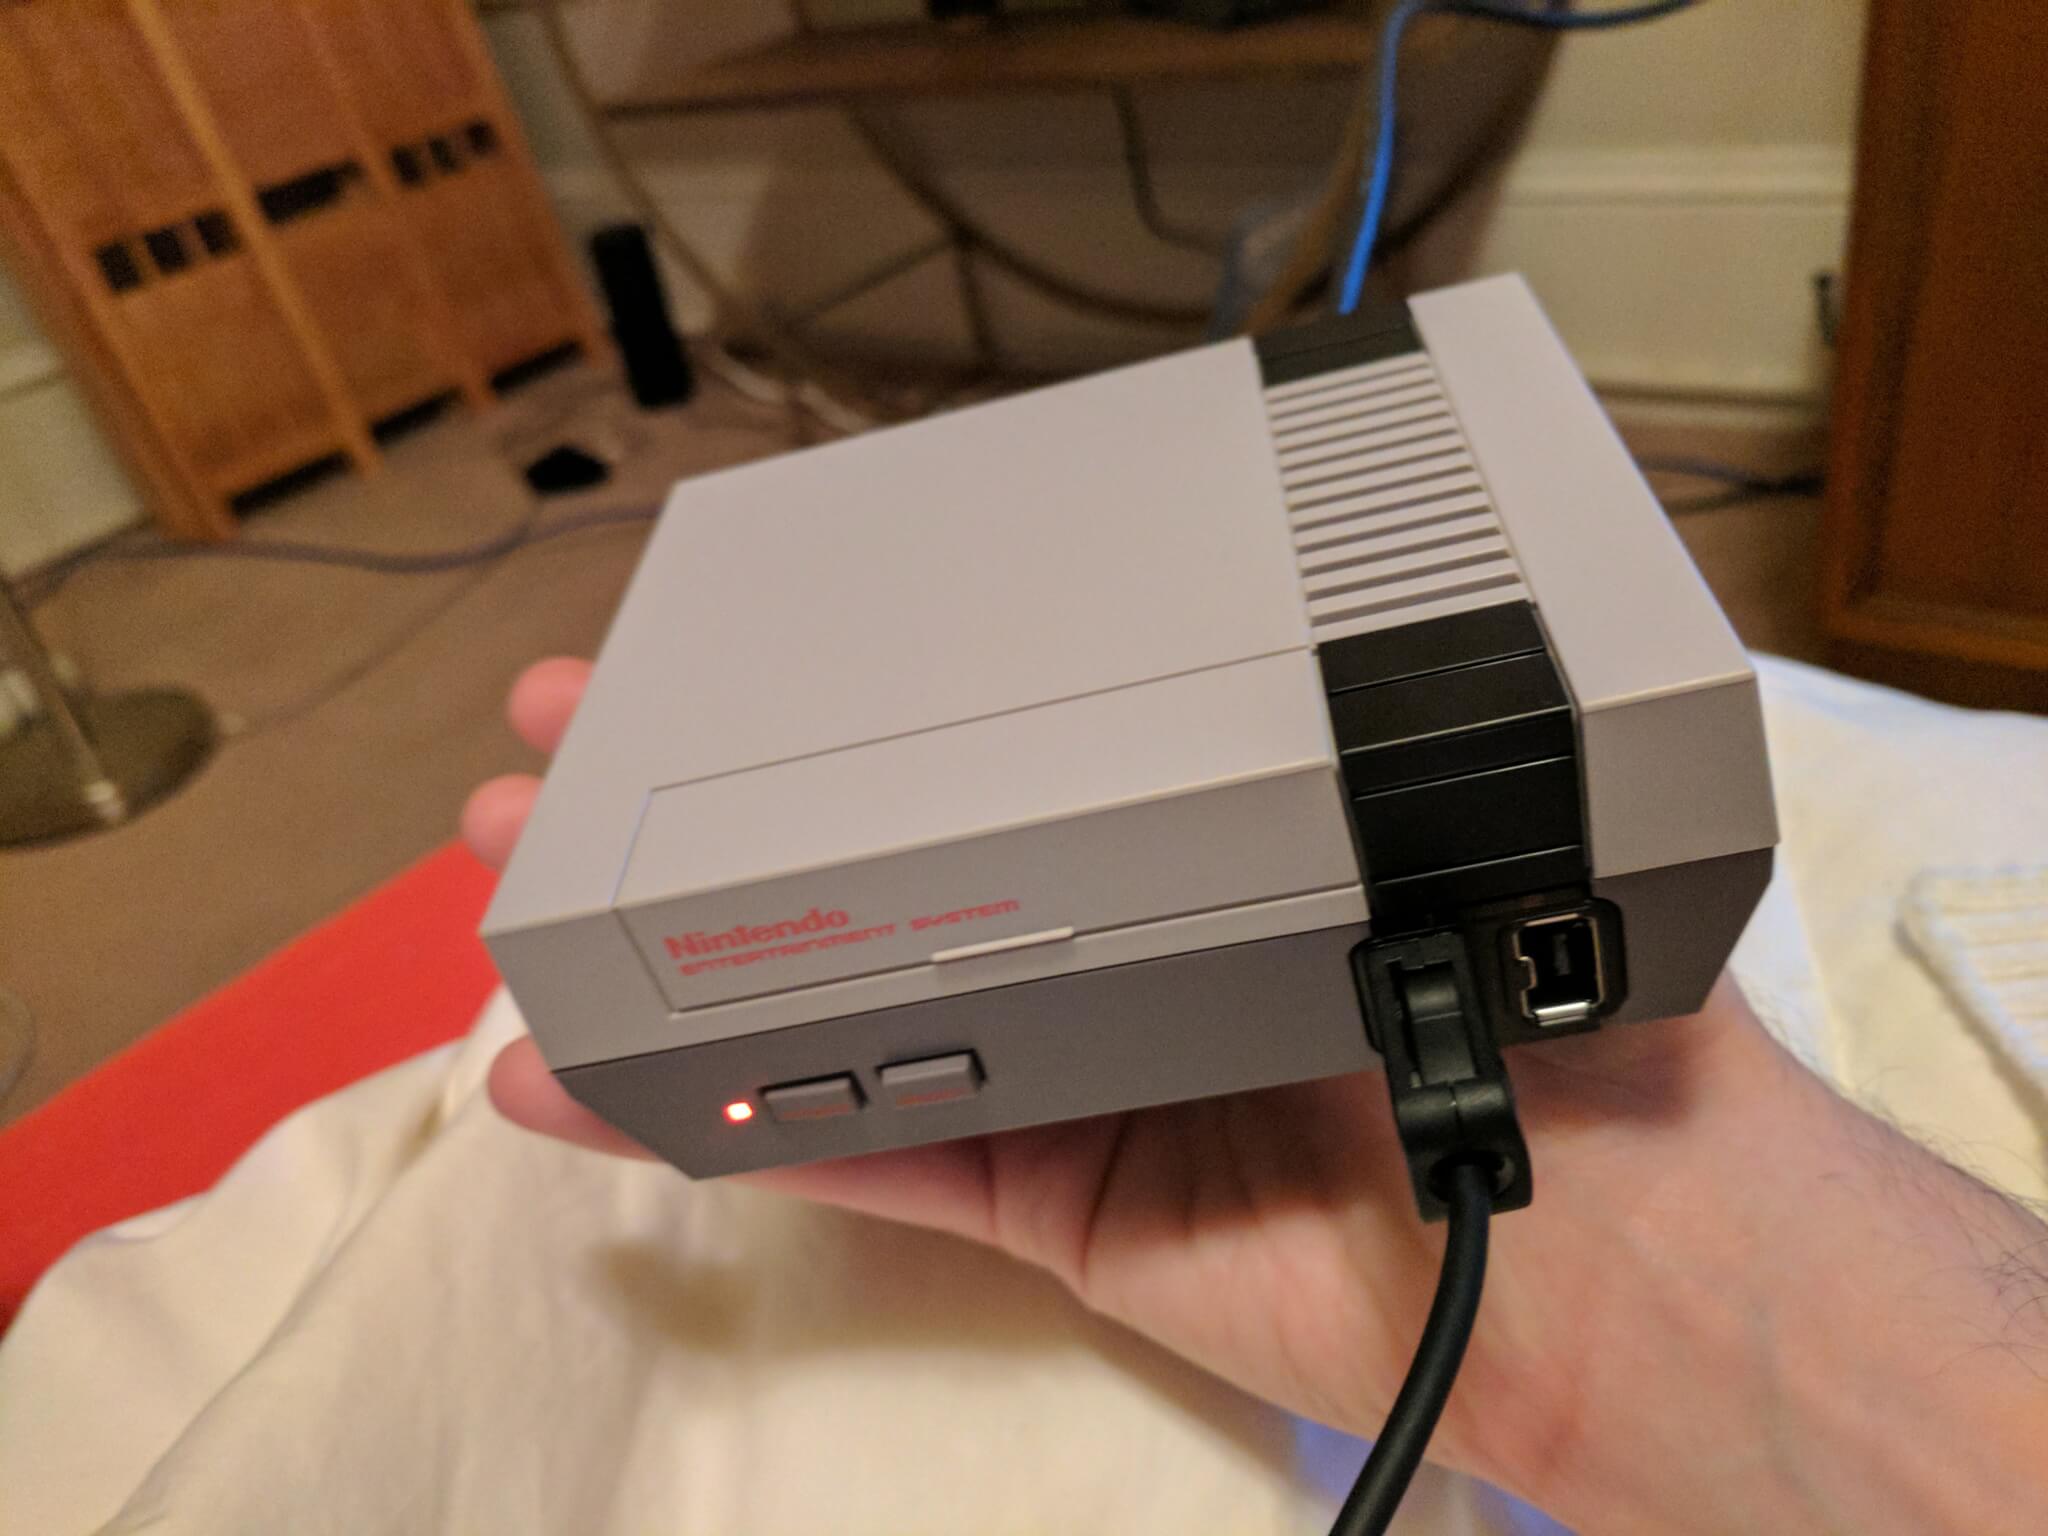 Nintendo's NES Classic.